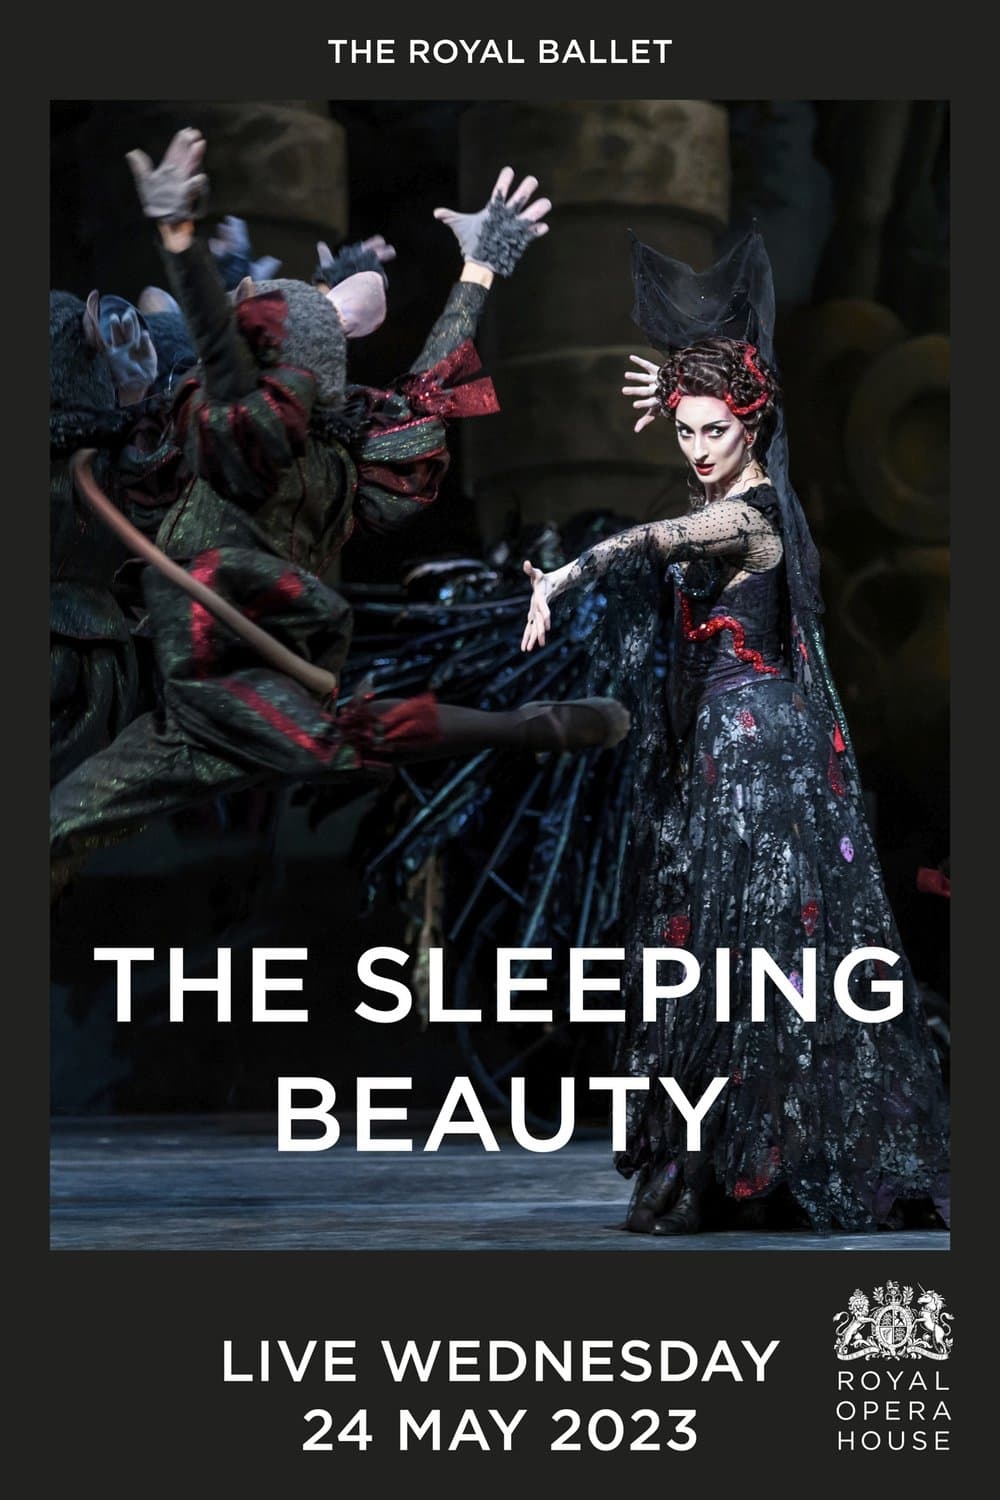 The Royal Ballet: The Sleeping Beauty